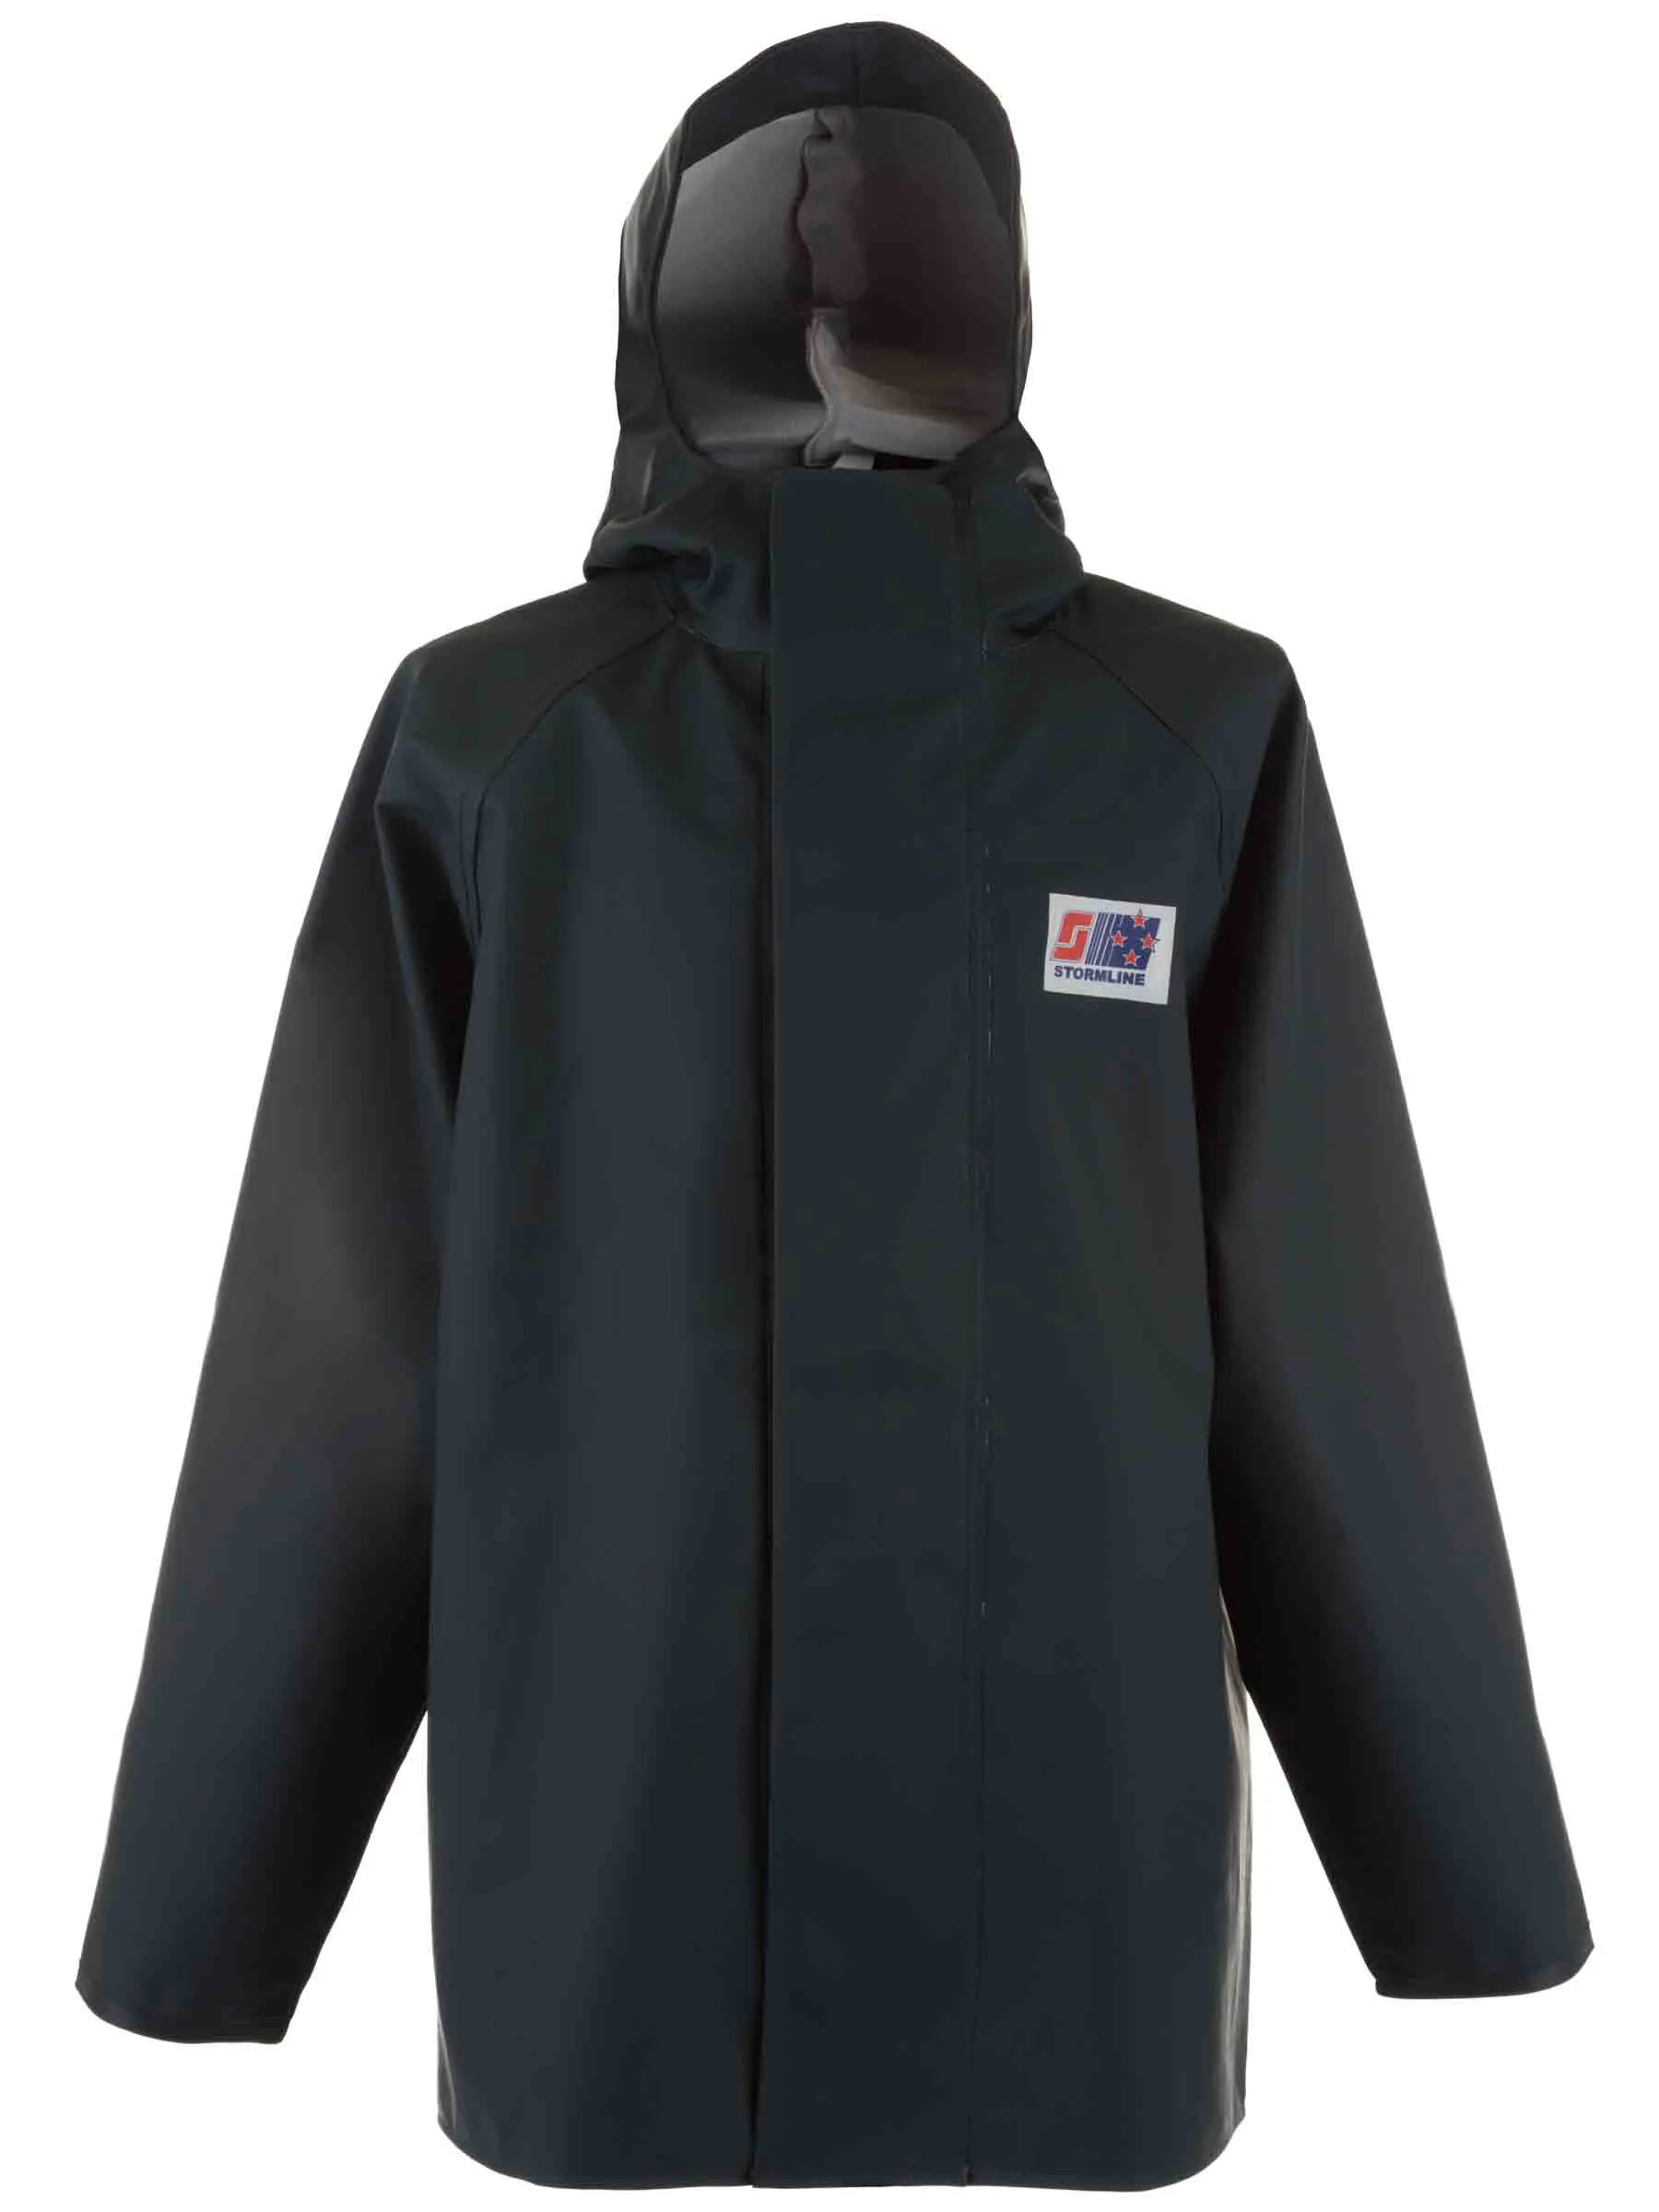 Stormtex 248g Midweight PVC Commercial Rain Gear Jacket - Green (Size: L)